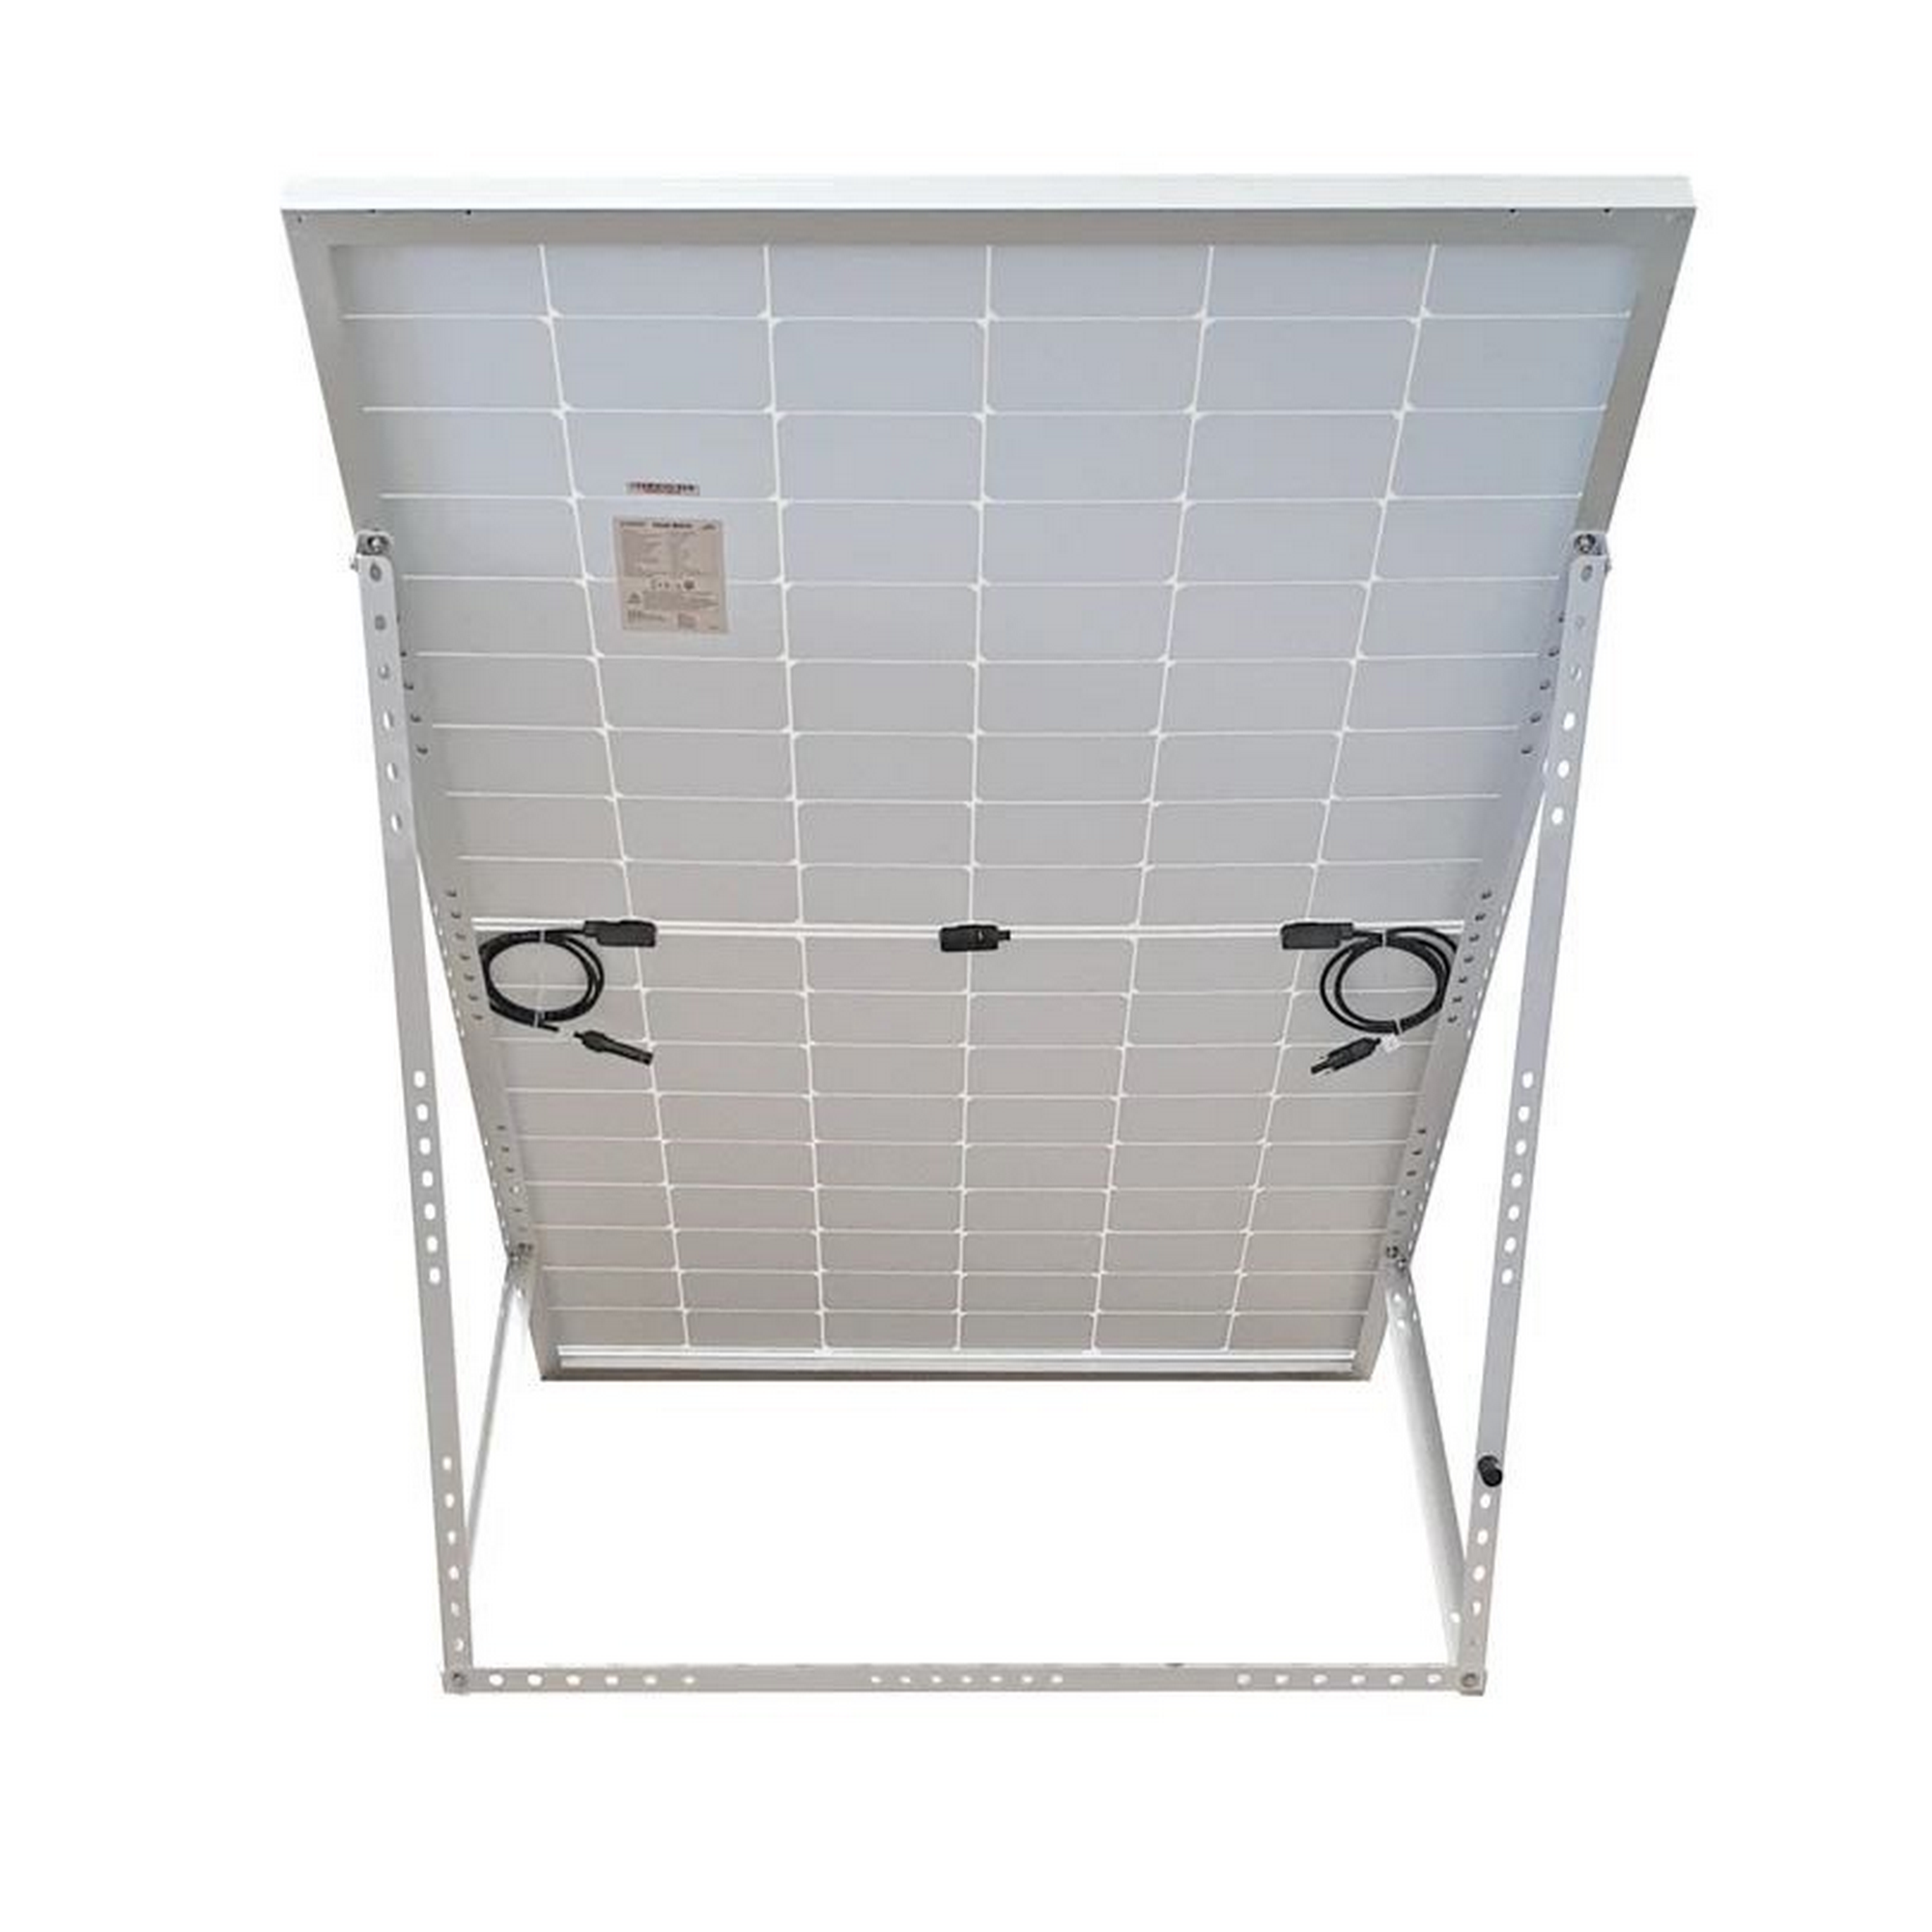 Solarmodul-Set 800 W + product picture